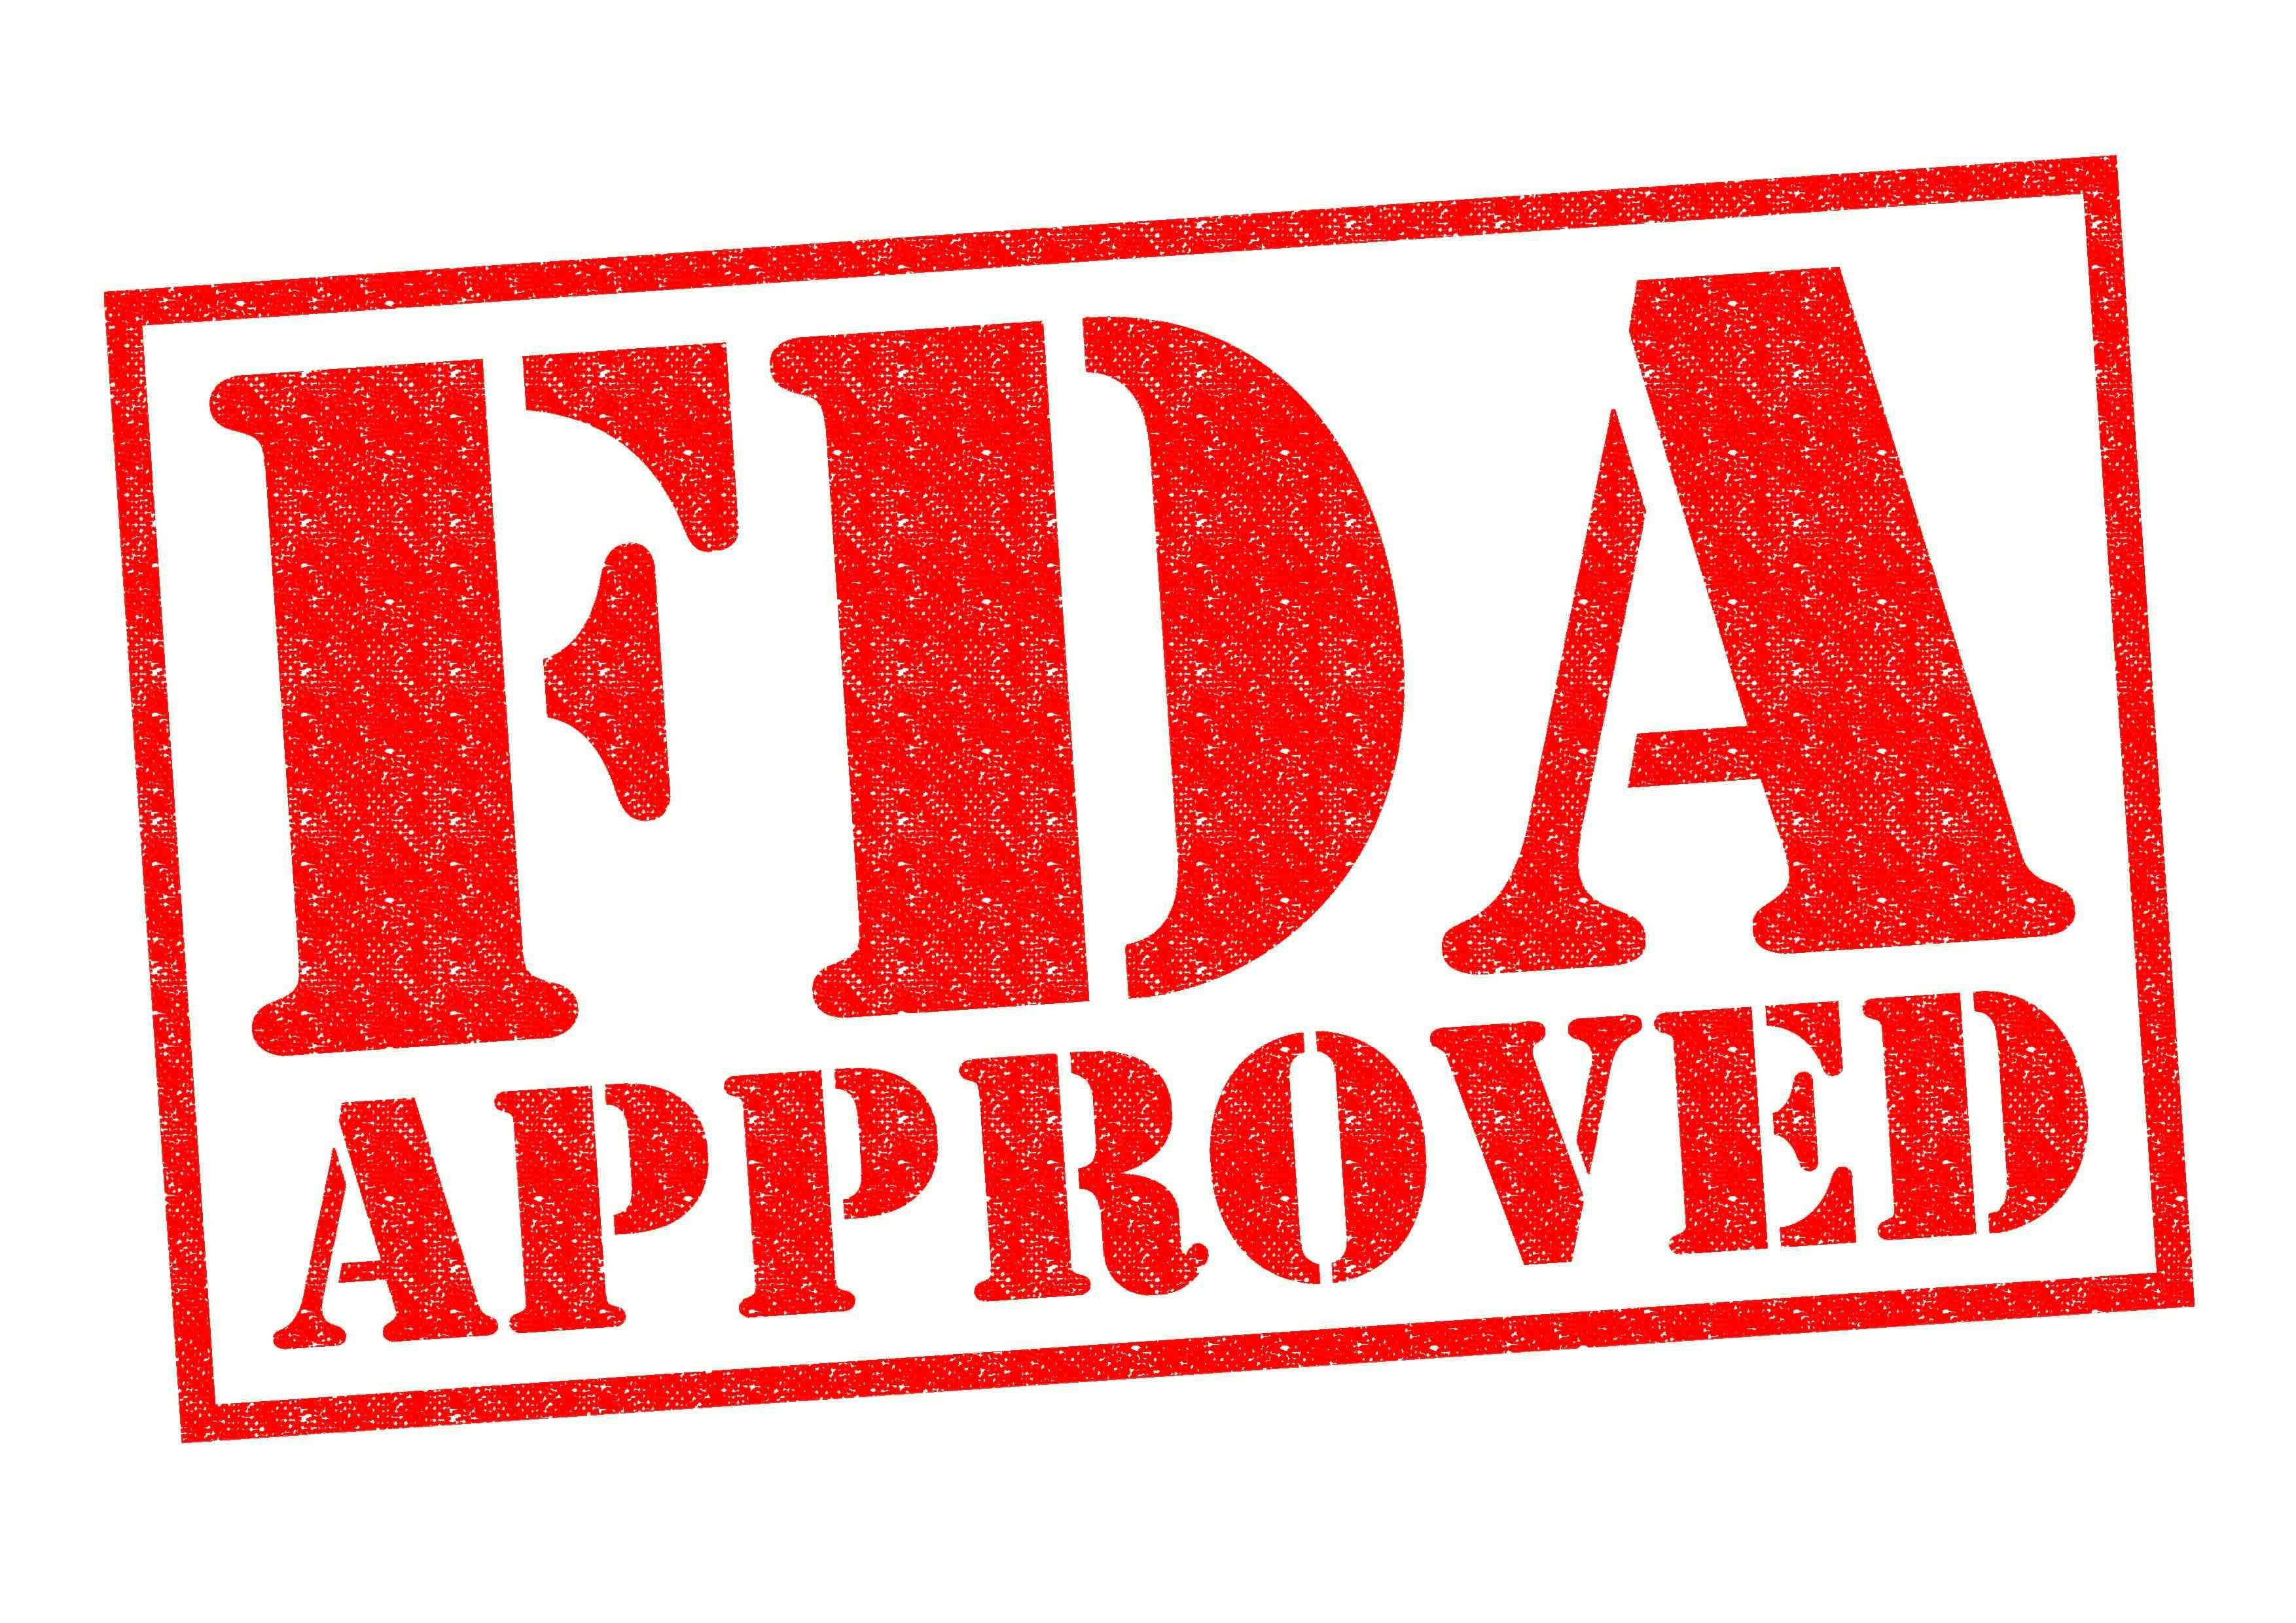 Red FDA approved stamp on white background | Image credit: chrisdorney - stock.adobe.com